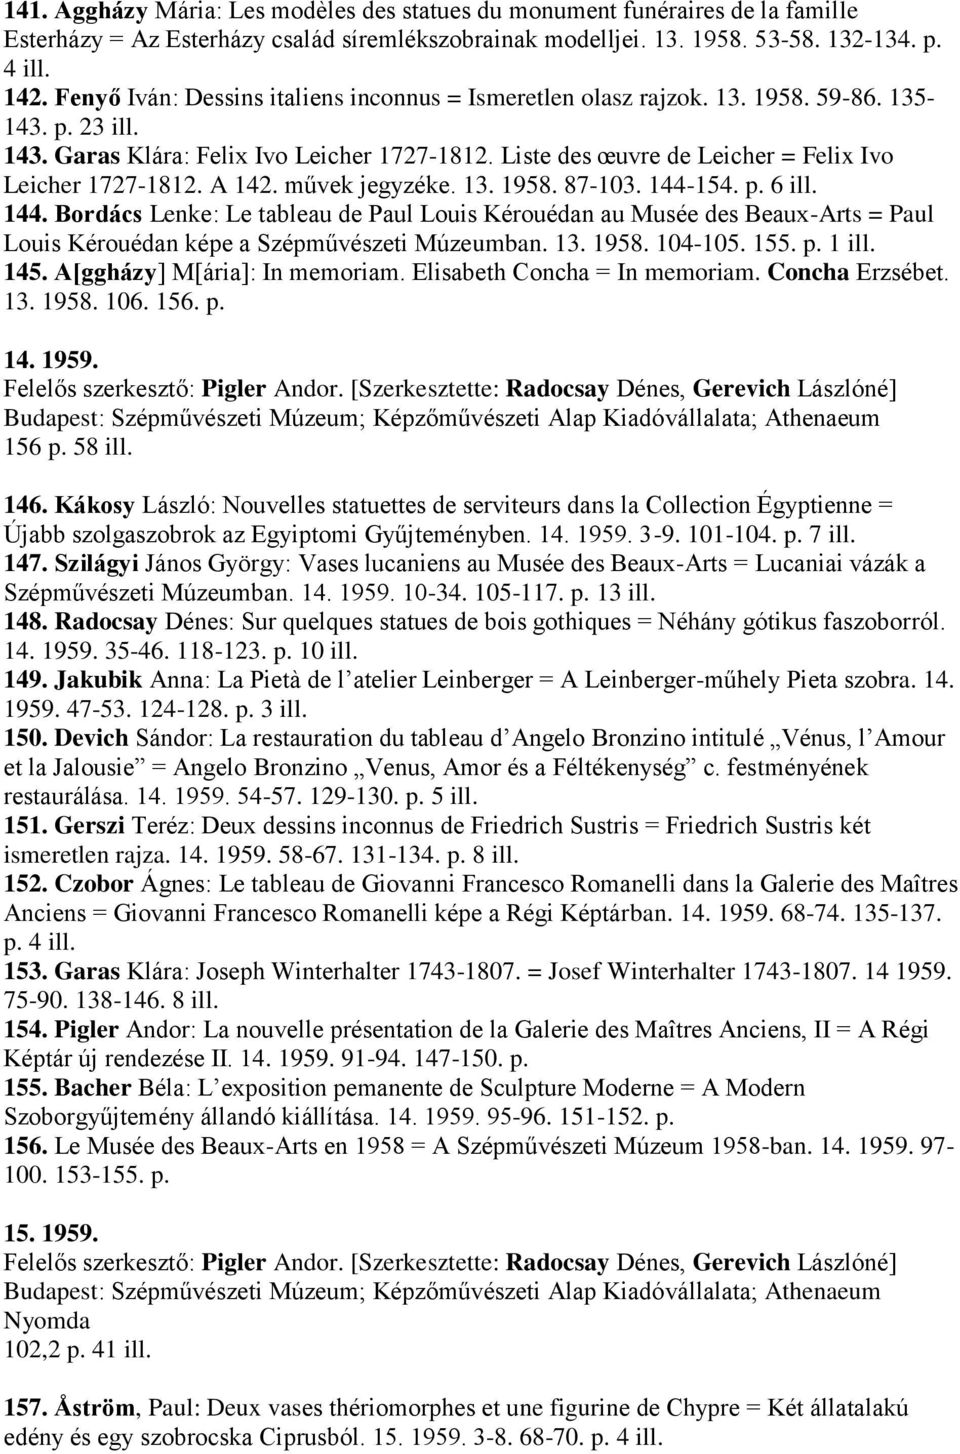 Liste des œuvre de Leicher = Felix Ivo Leicher 1727-1812. A 142. művek jegyzéke. 13. 1958. 87-103. 144-